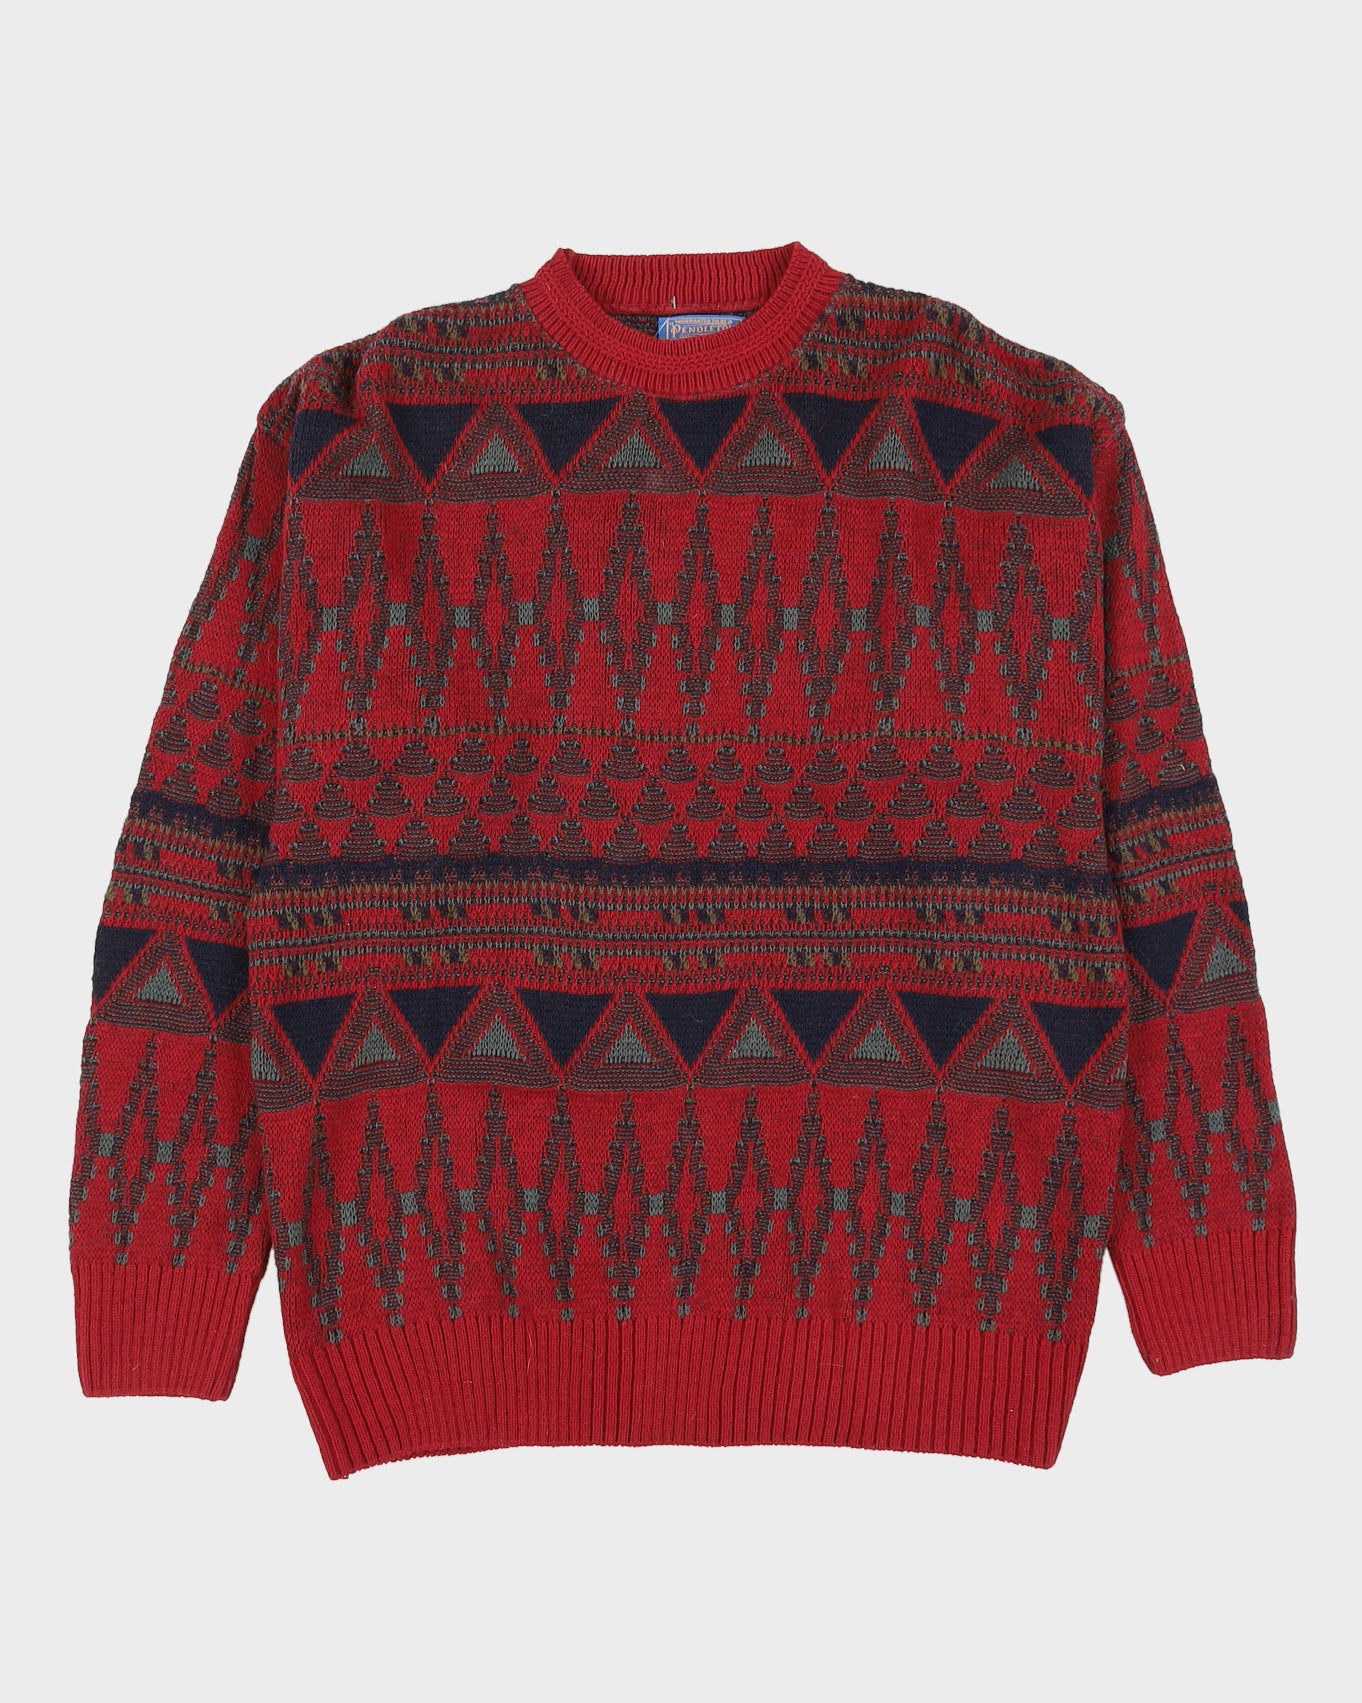 Pendleton Red Patterned Knitted Jumper - L